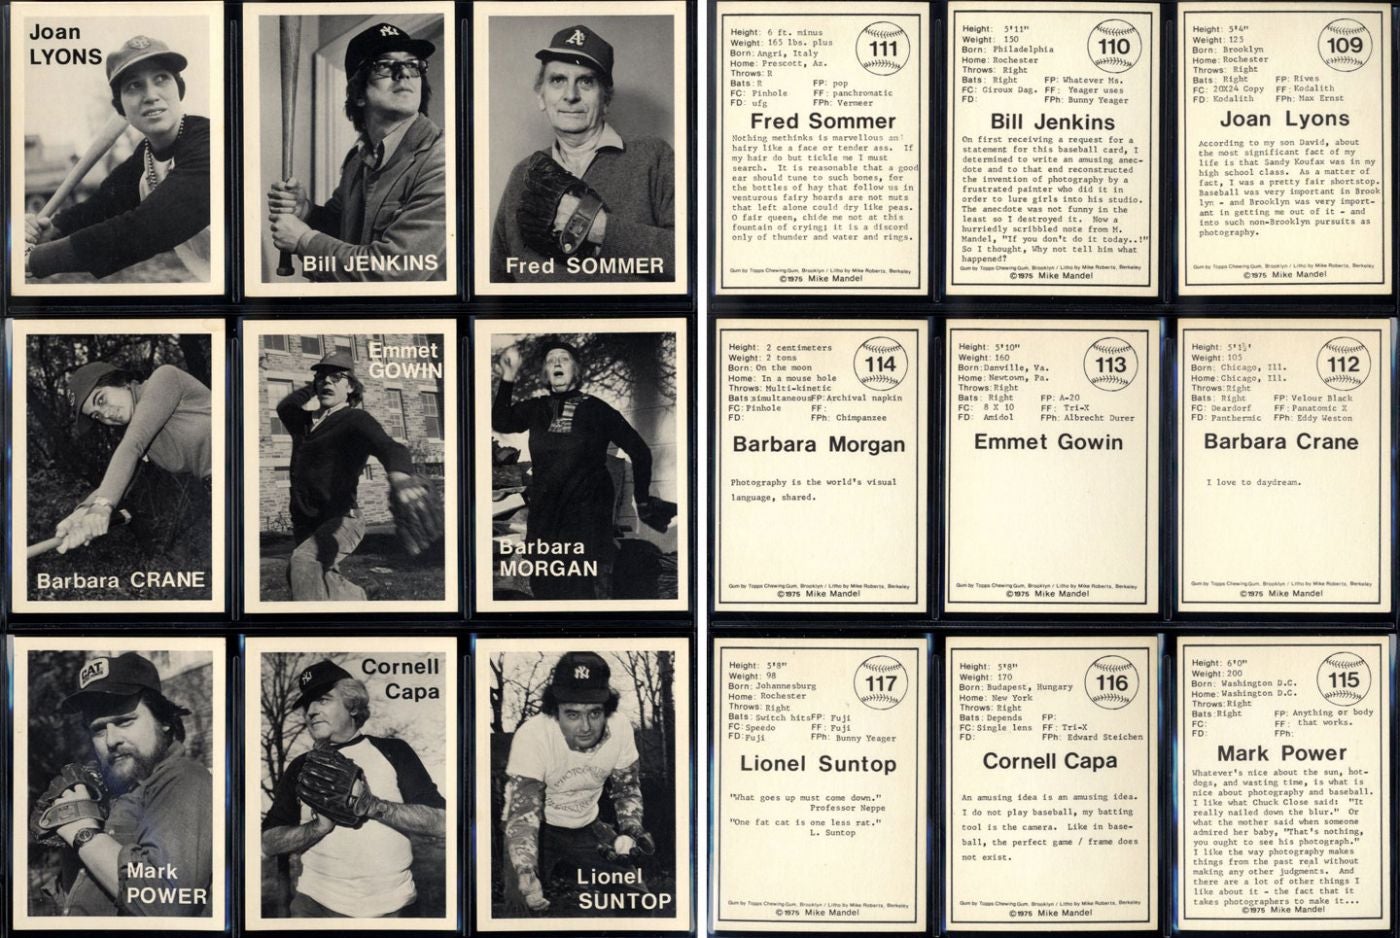 Mike Mandel: Untitled (Baseball-Photographer Trading Cards), Complete Set of 135 Cards (Fine)